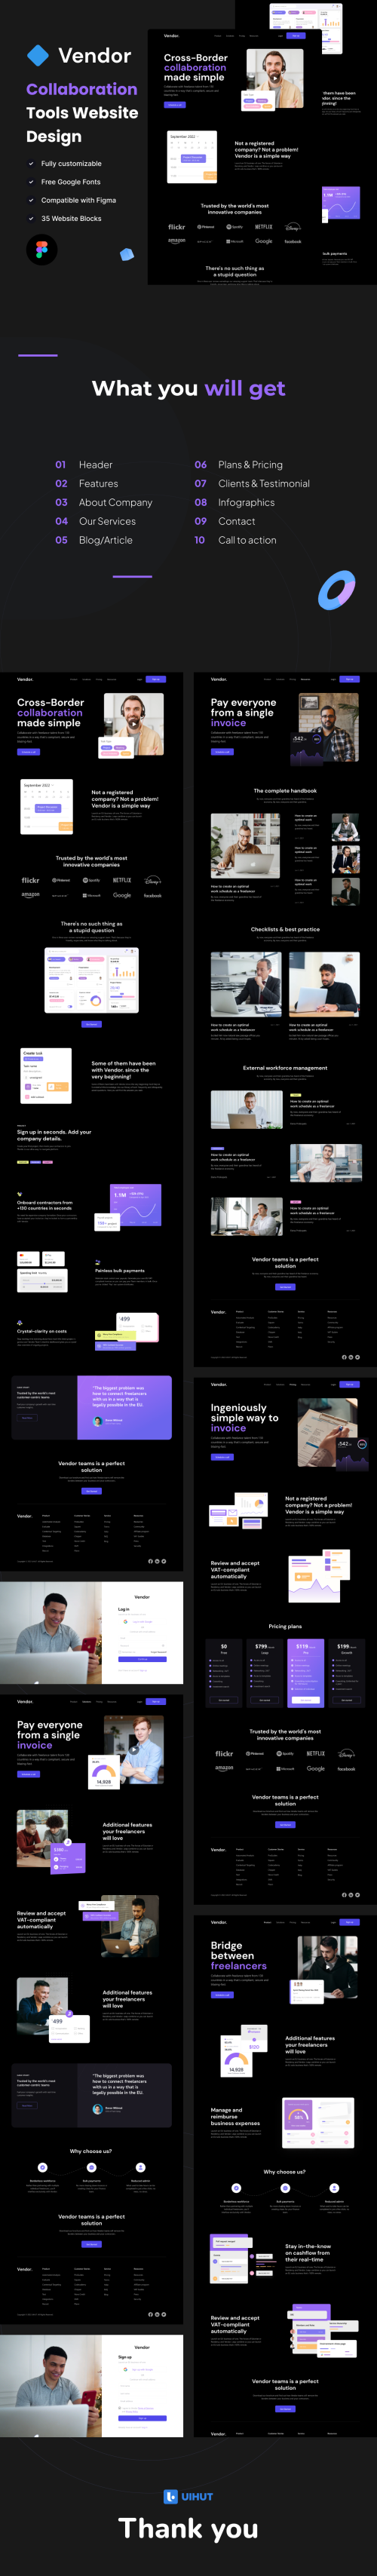 UIHut - Online Collaboration Tool Website Design Template - 21703